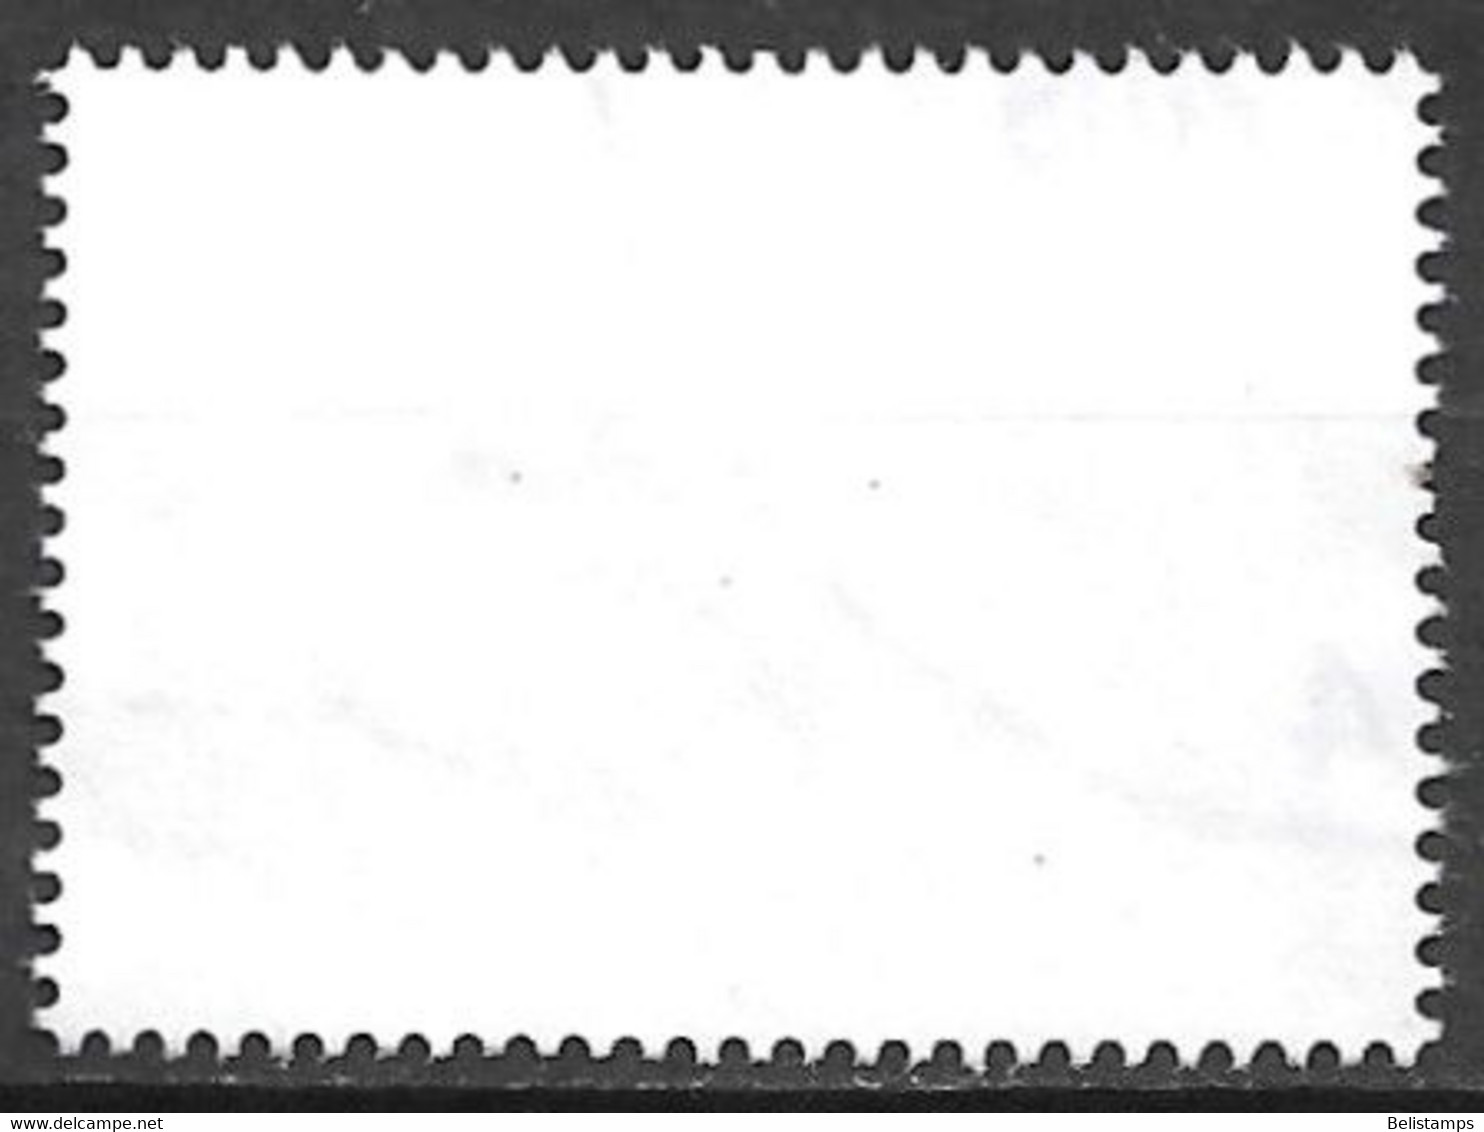 South Africa 2010. Scott #1438 (U) Mfengu Tobacco Bag - Used Stamps